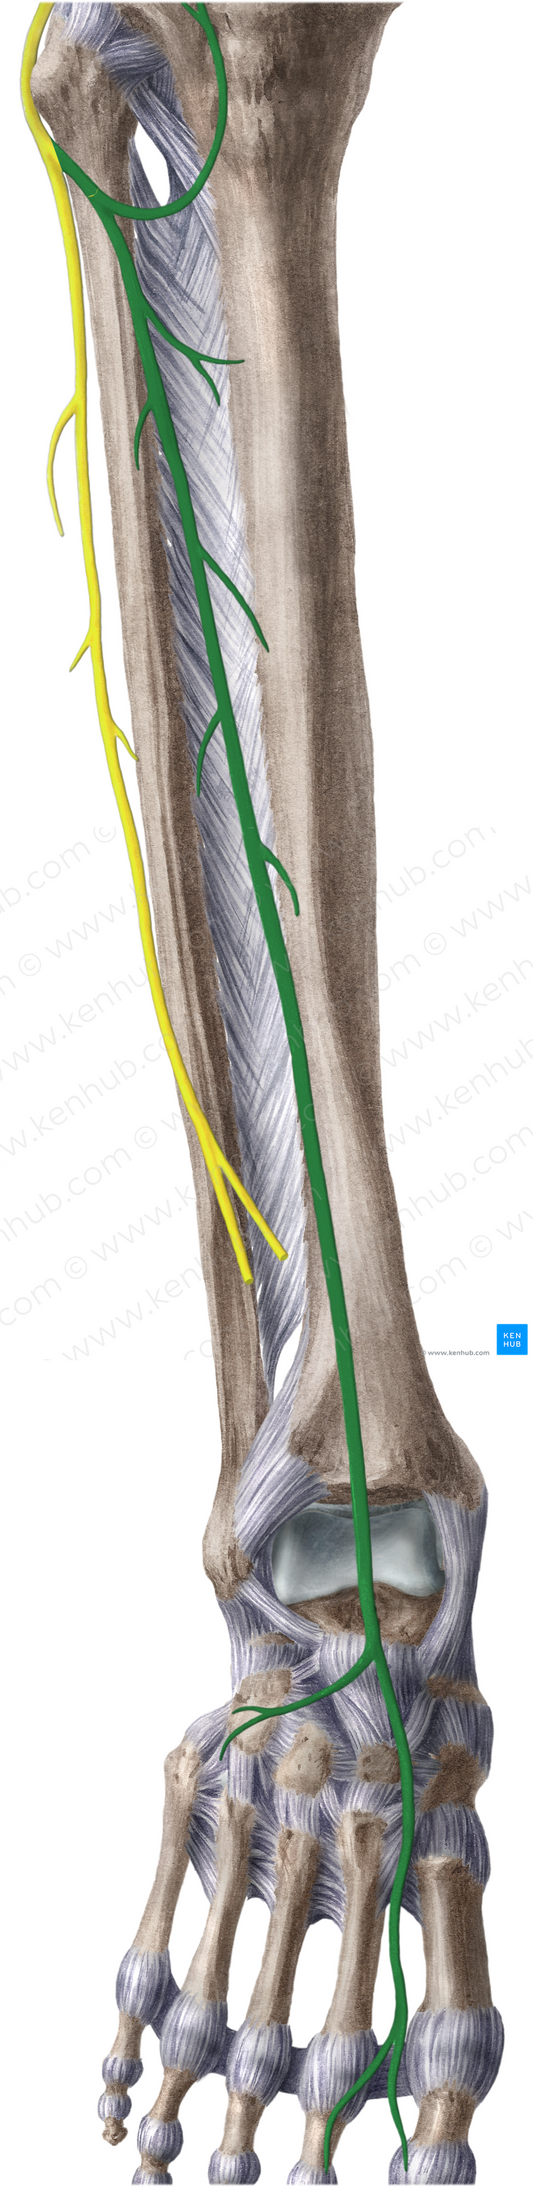 Deep fibular nerve (#6665)